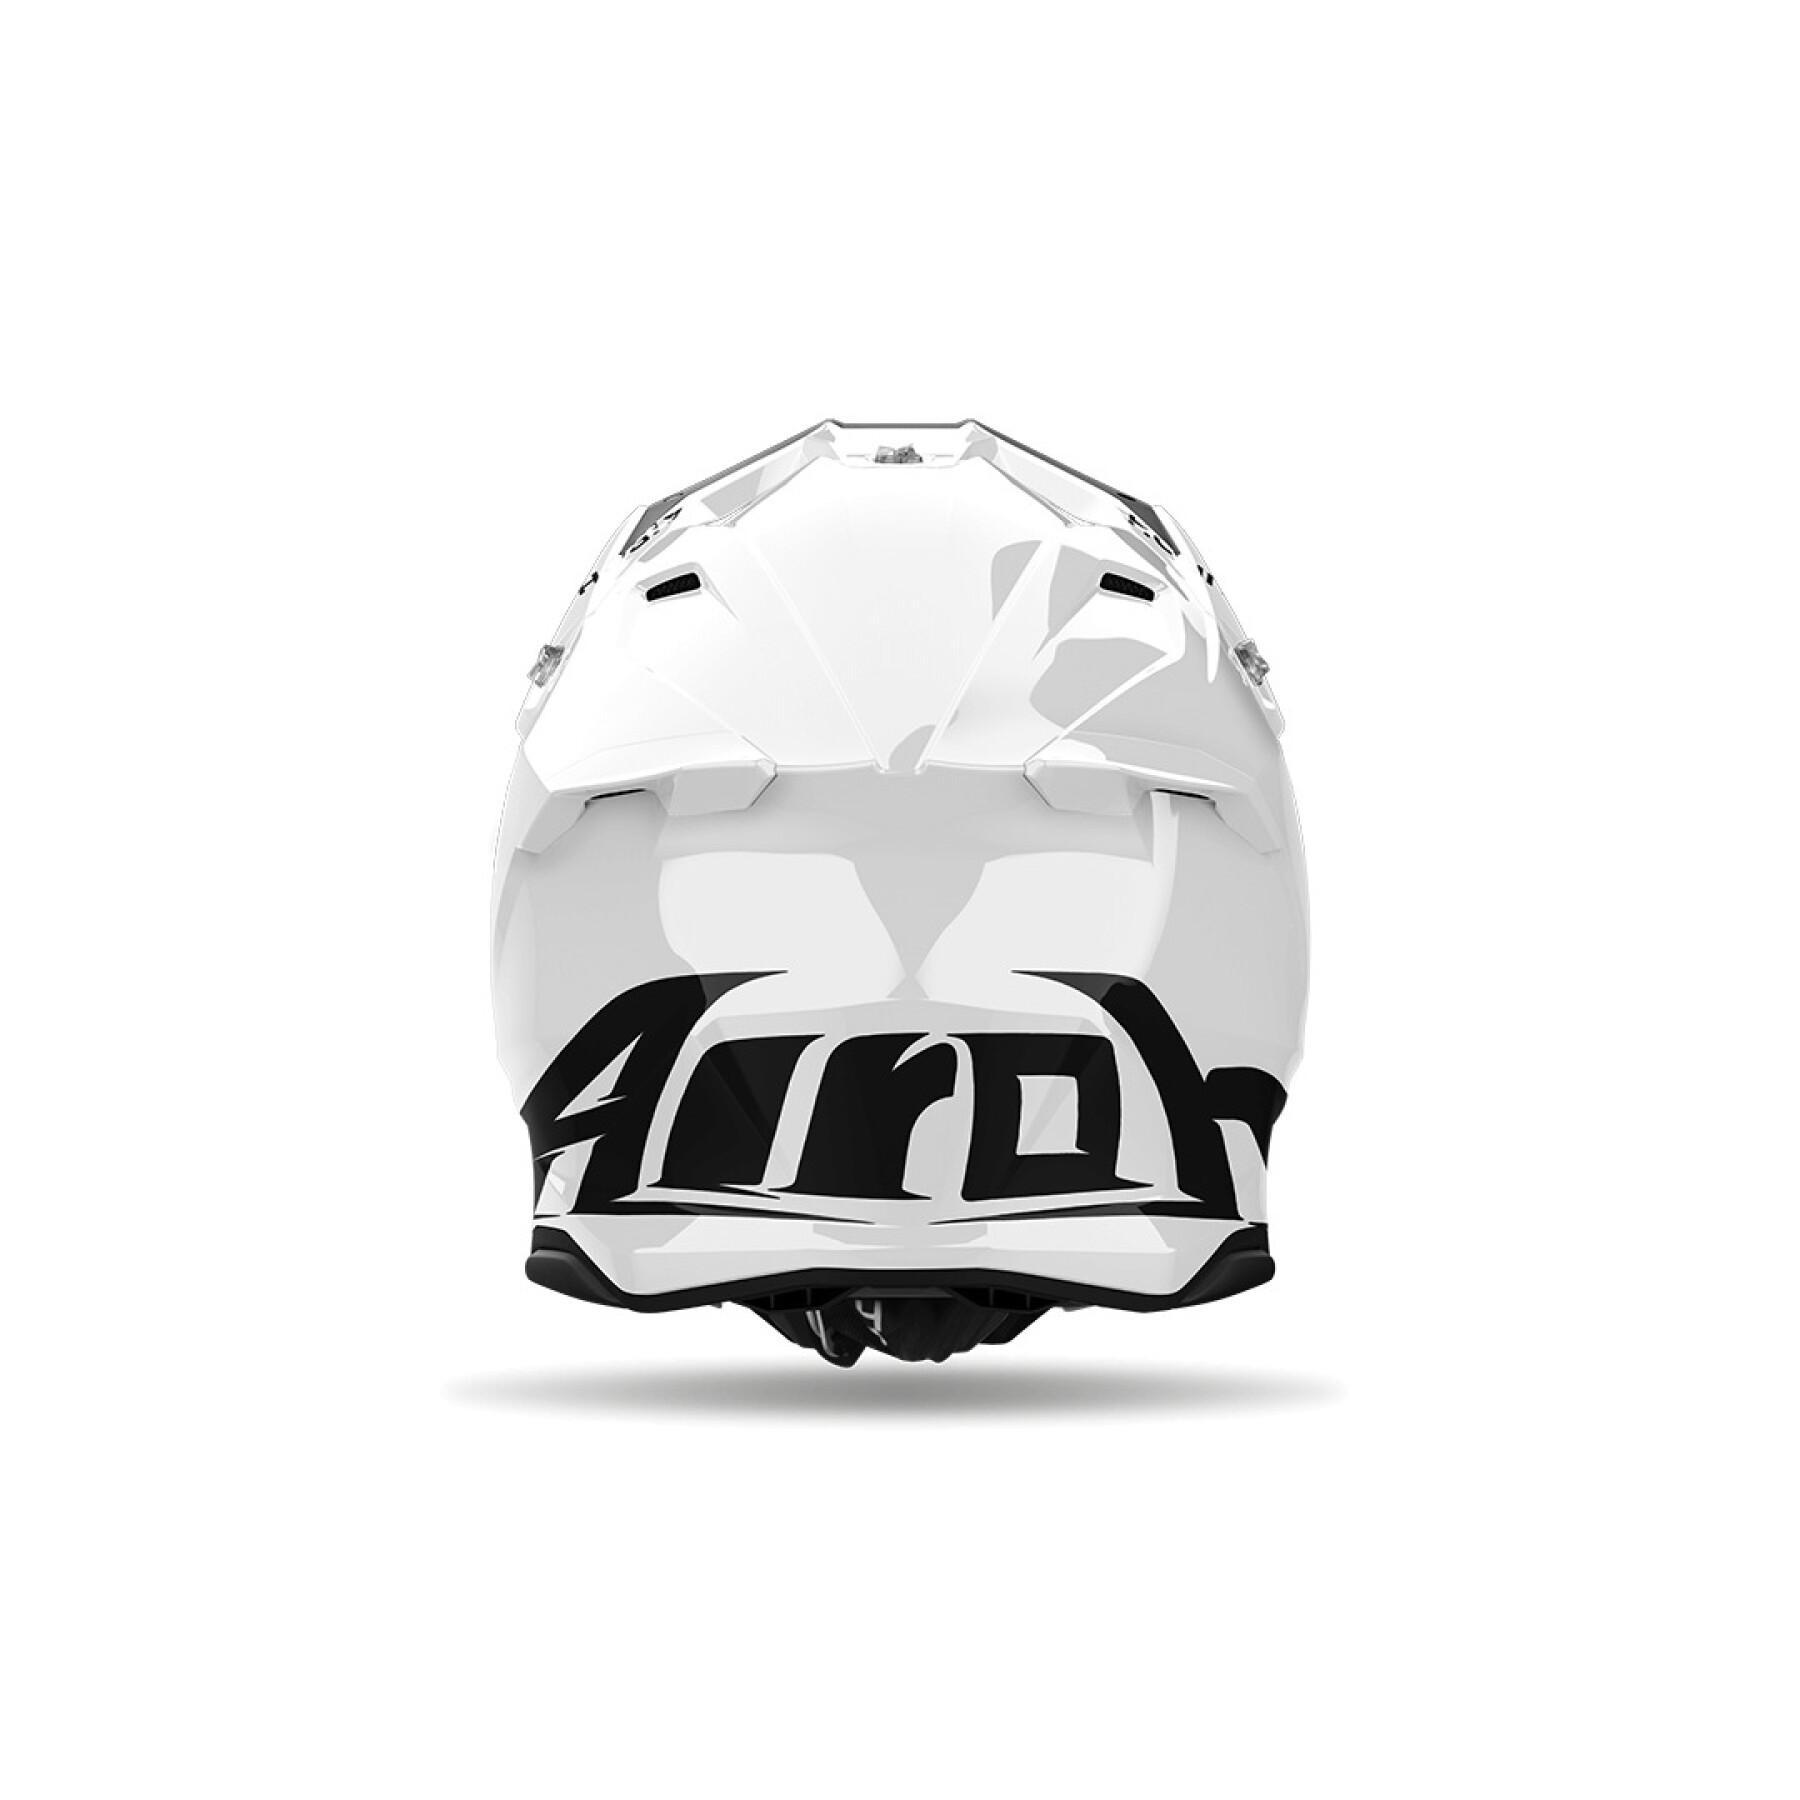 Capacete de motocicleta Airoh Twist 3 Color